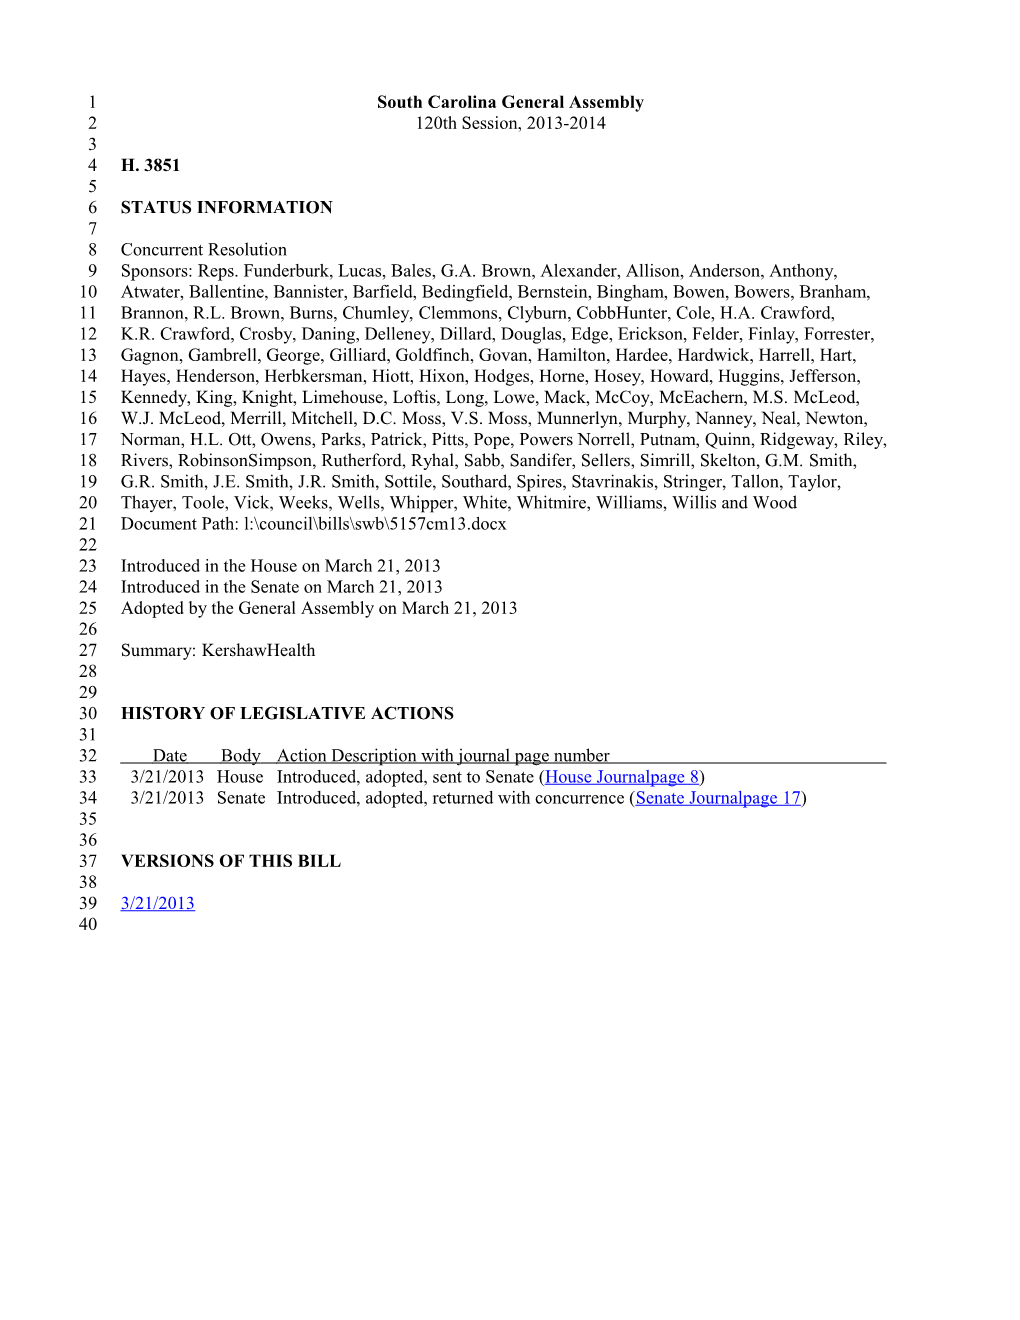 2013-2014 Bill 3851: Kershawhealth - South Carolina Legislature Online